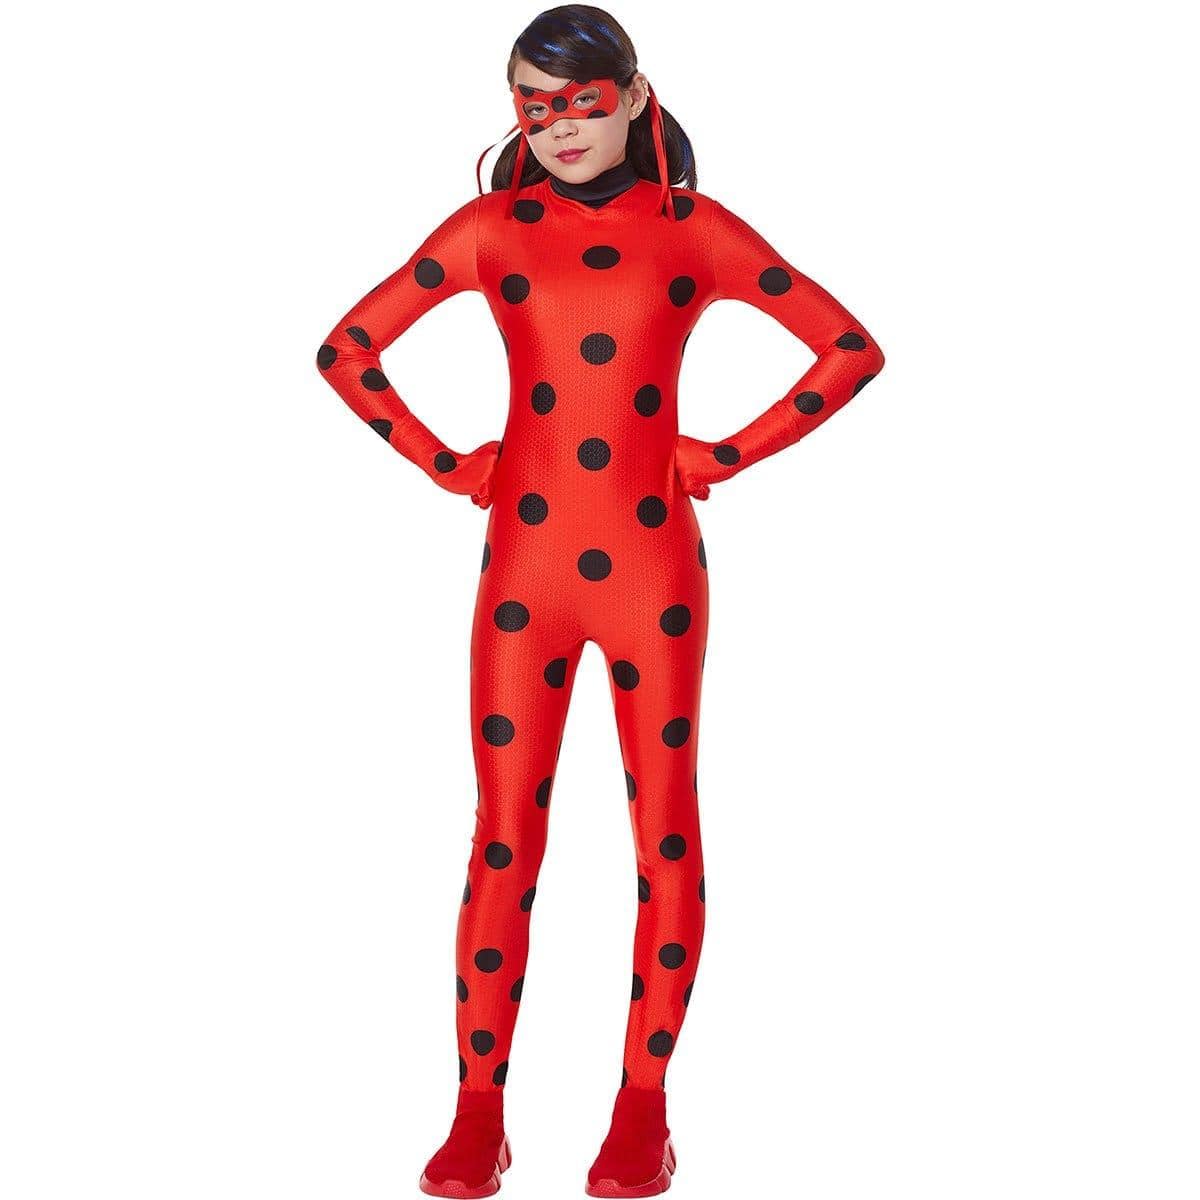 Ladybug Classic Costume for Kids, Miraculous LadyBug